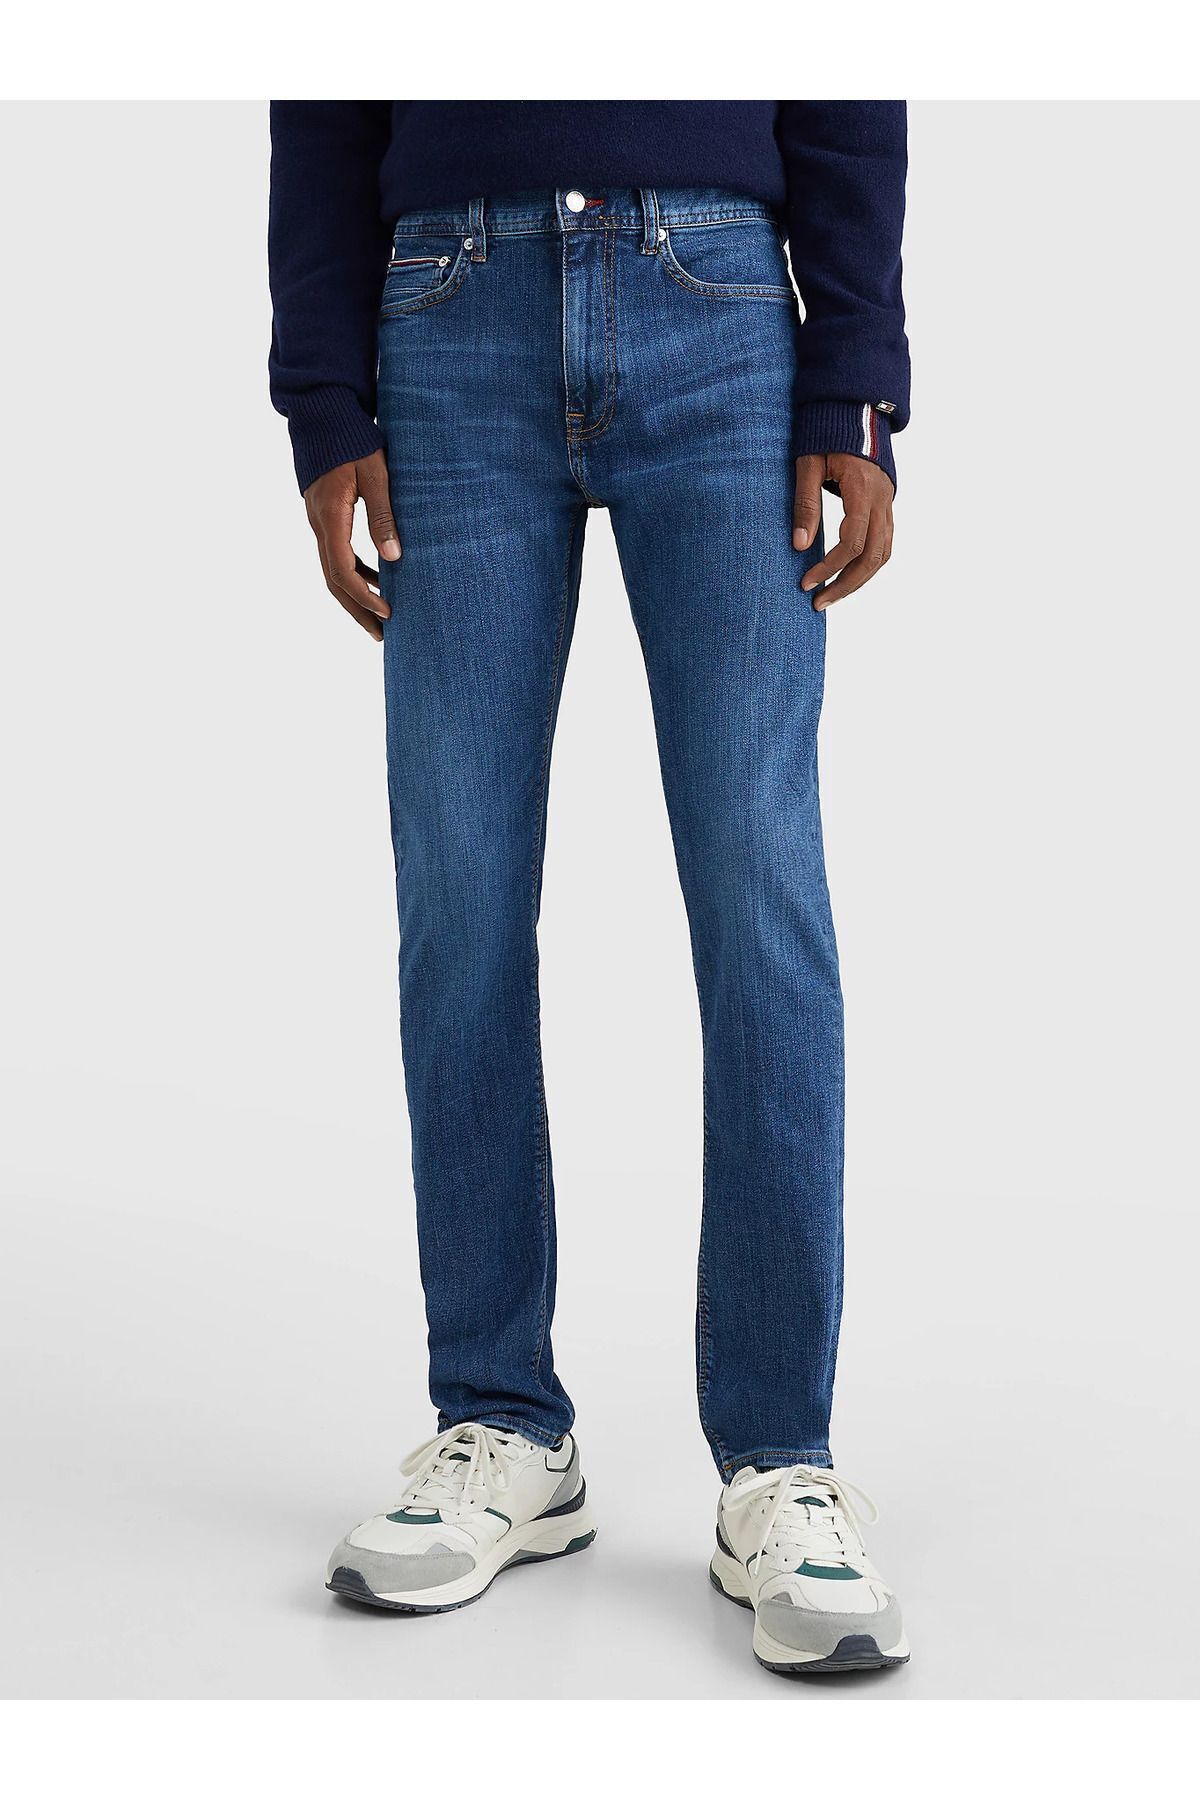 Tommy Hilfiger Erkek Denim Normal Belli Düz Model Günlük Kullanım Mavi Jeans MW0MW18279-1C4